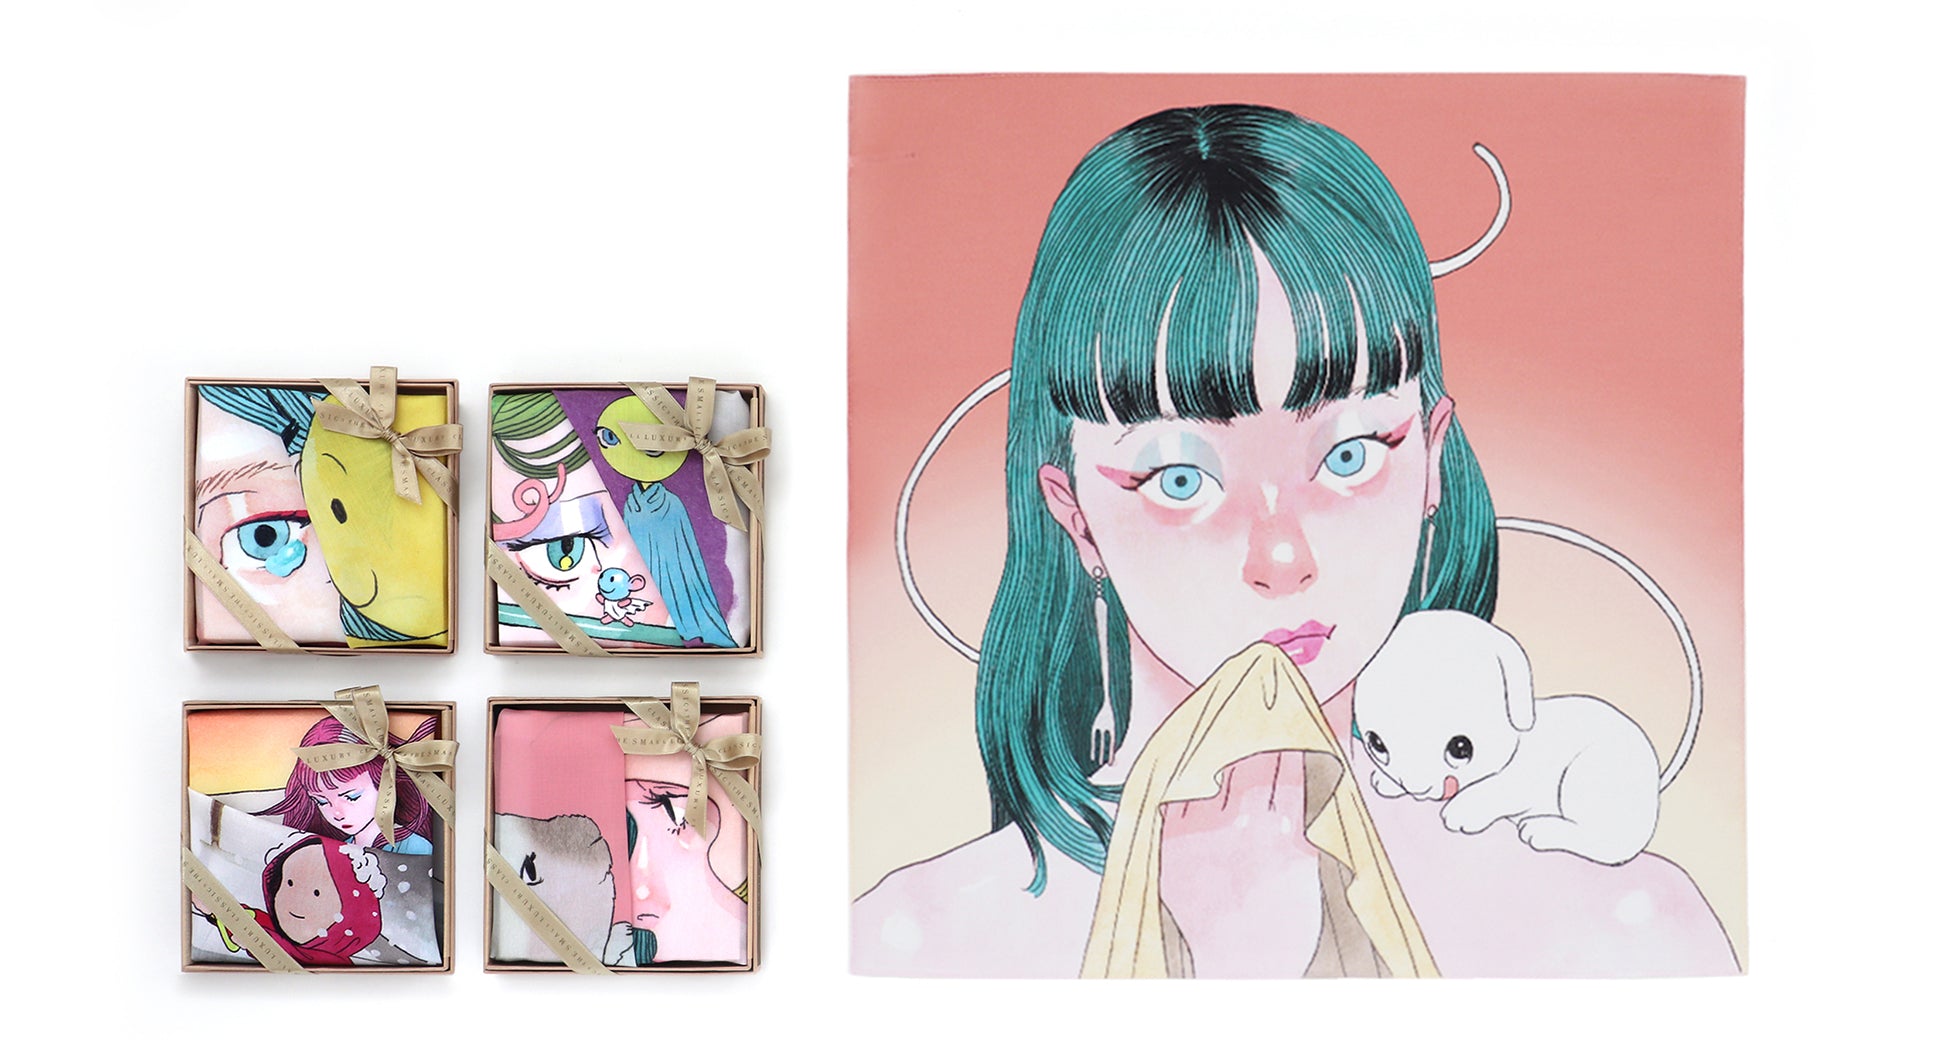 Handkerchiefs, the fifth collaboration with artist Isamu Gakiya, will